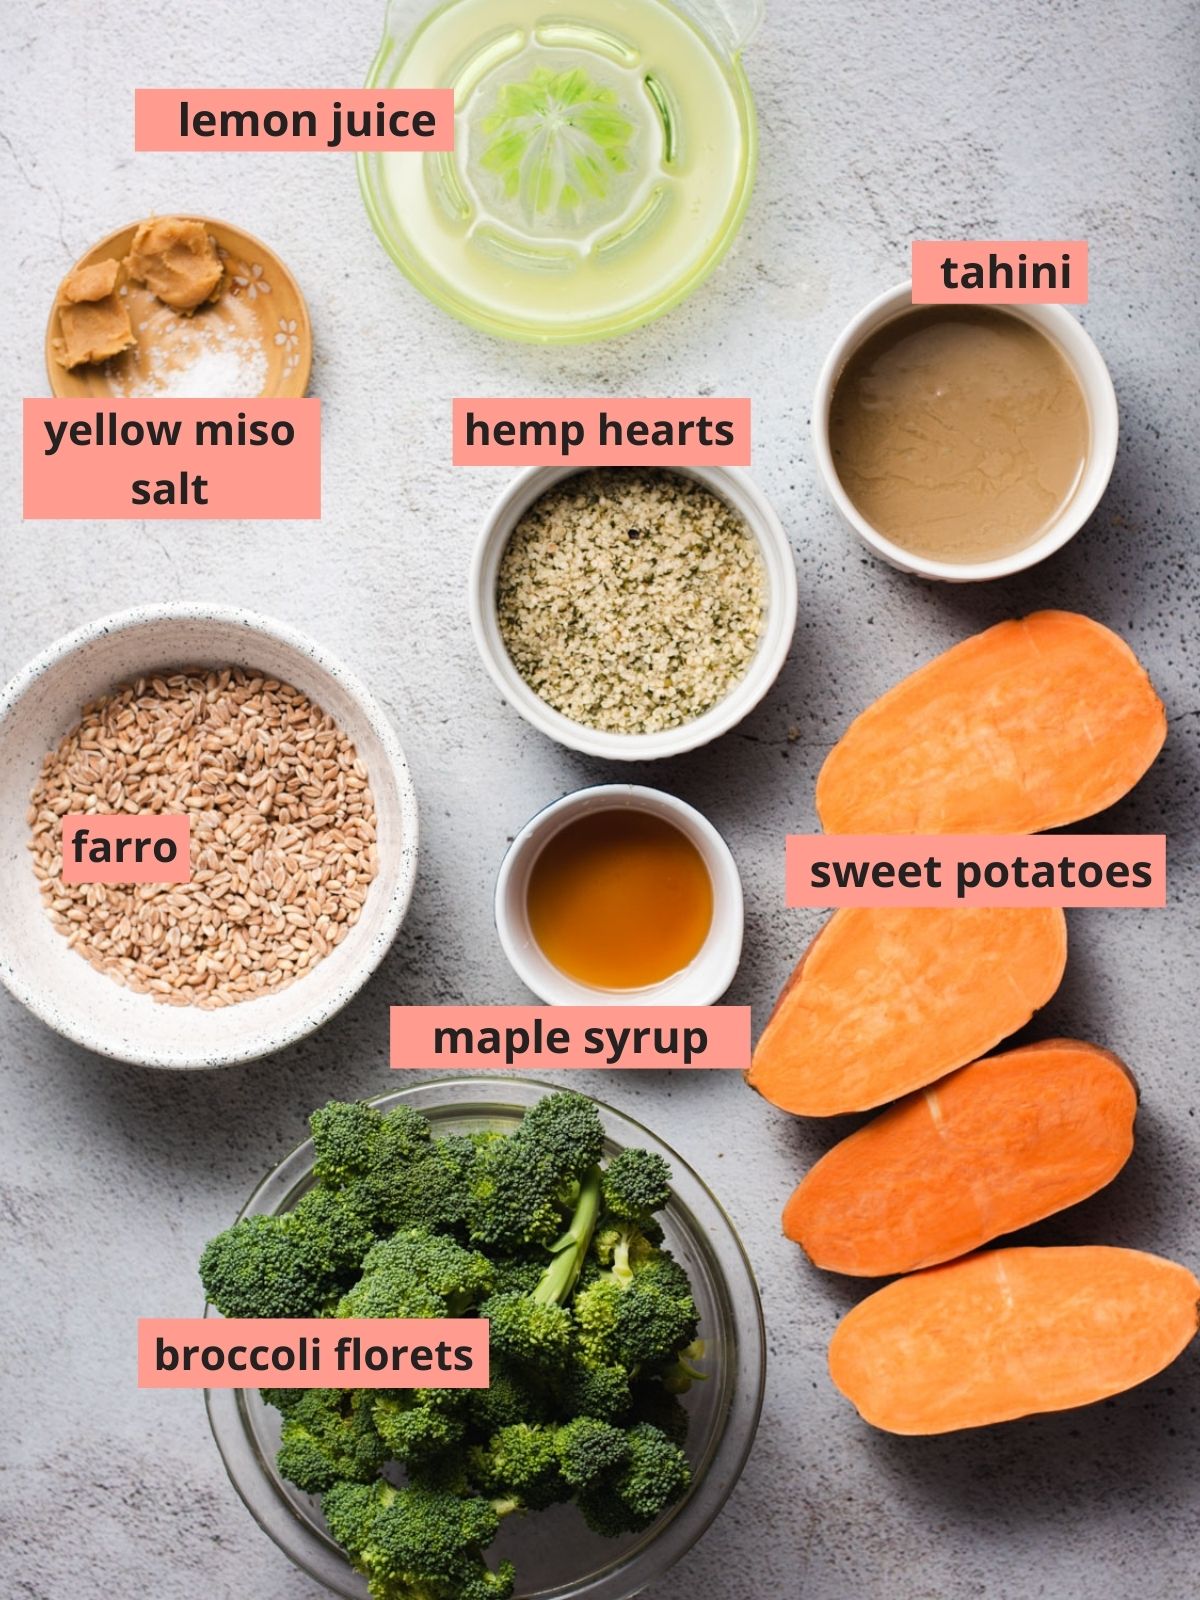 Labeled ingredients used to make sweet potato bowls